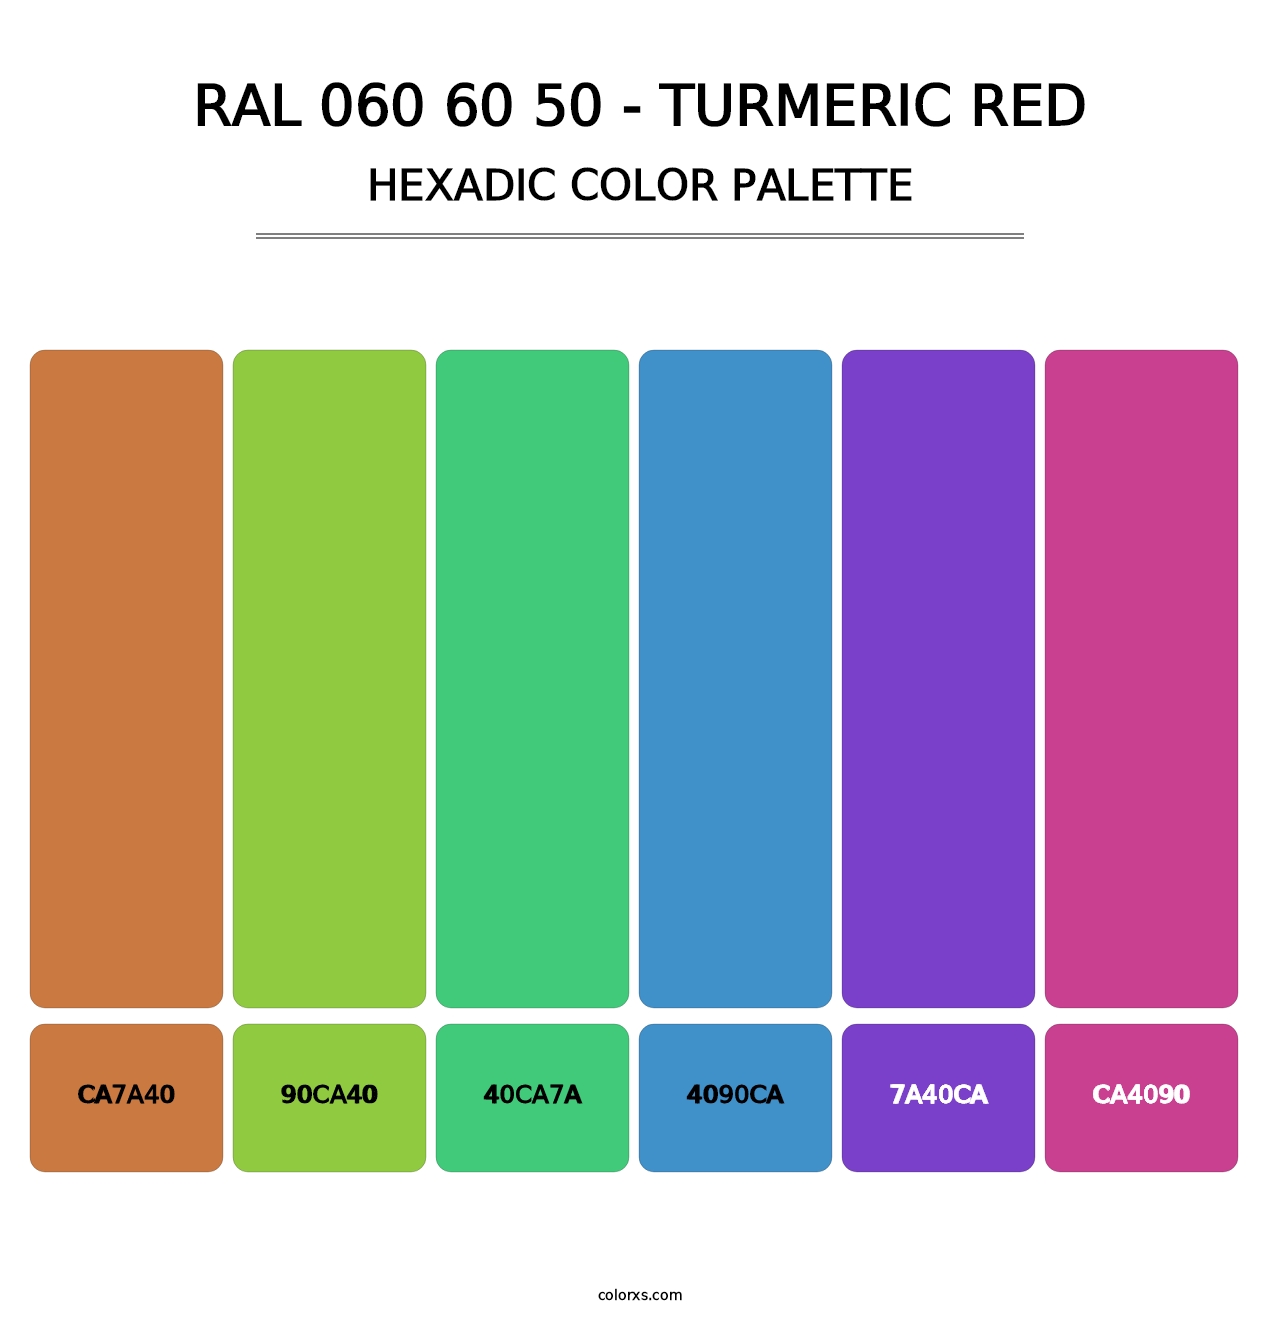 RAL 060 60 50 - Turmeric Red - Hexadic Color Palette